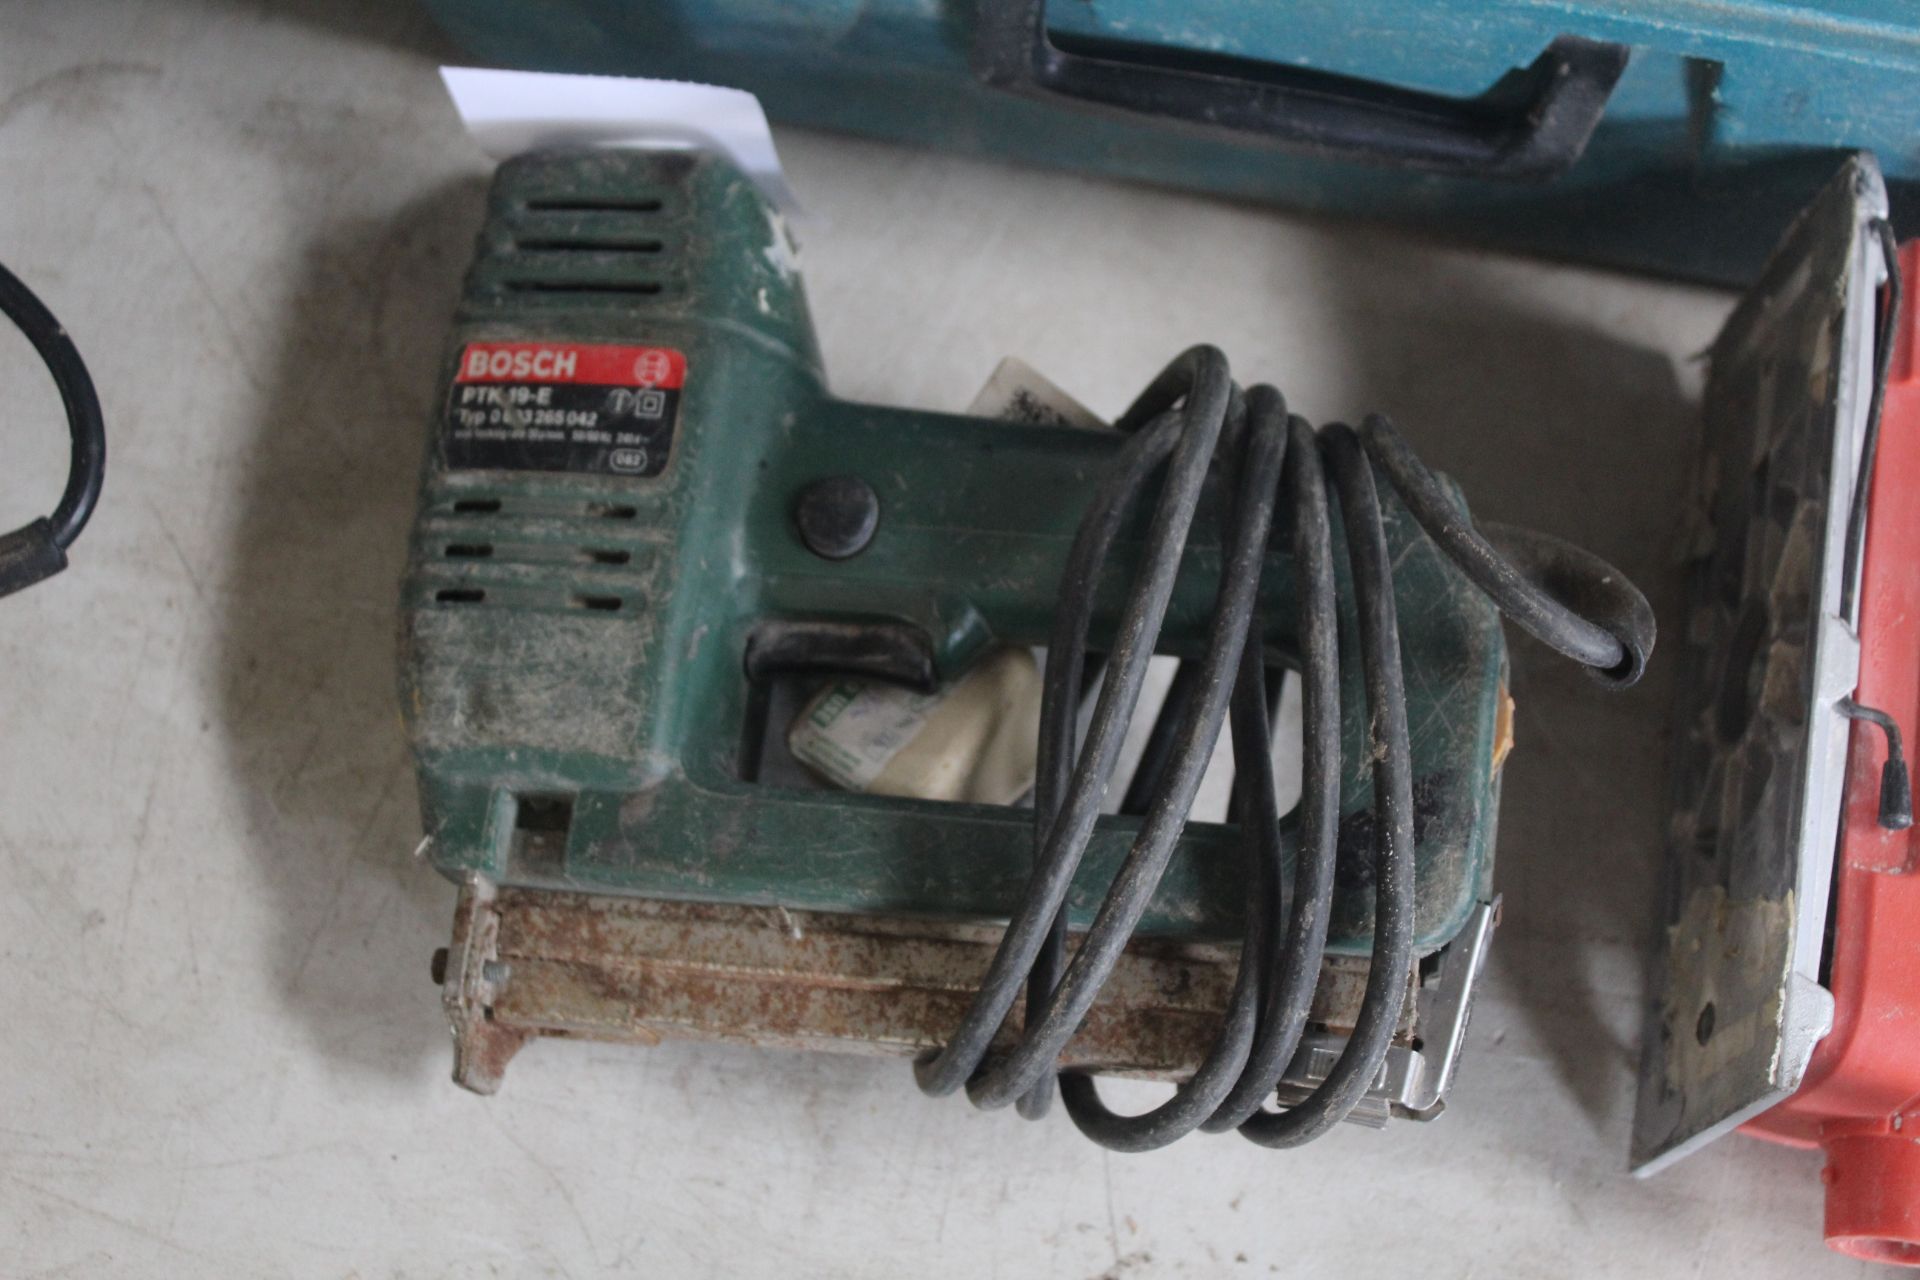 240v Black and Decker sander, Bosch stapler and Black and Decker hammer drill. - Image 2 of 4